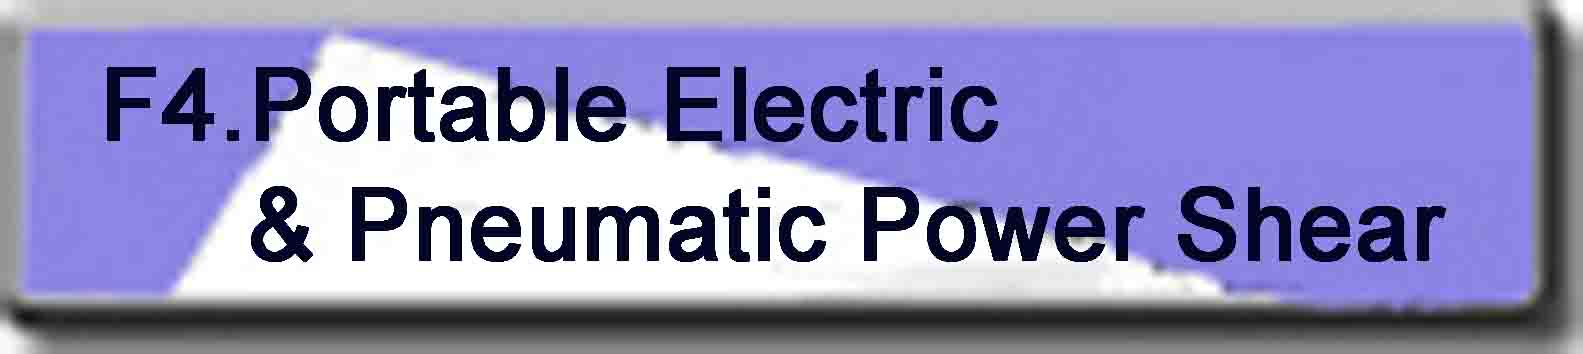 Portable Electric & Pneumatic Power Shear